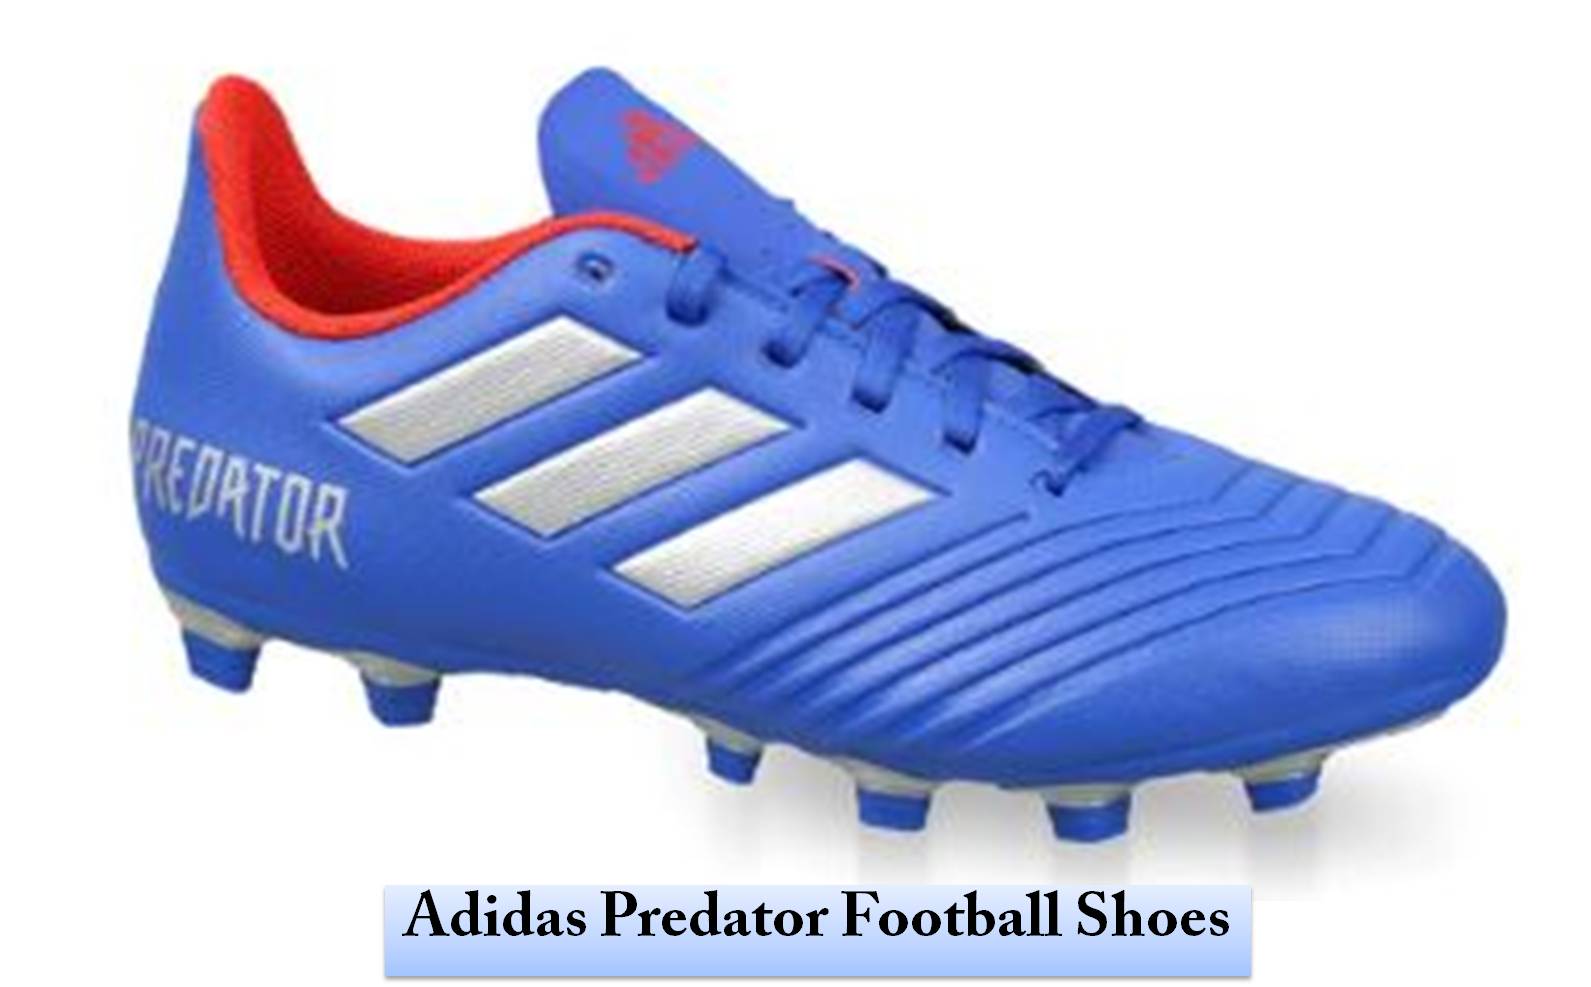 Adidas_Predator_Football_Shoes